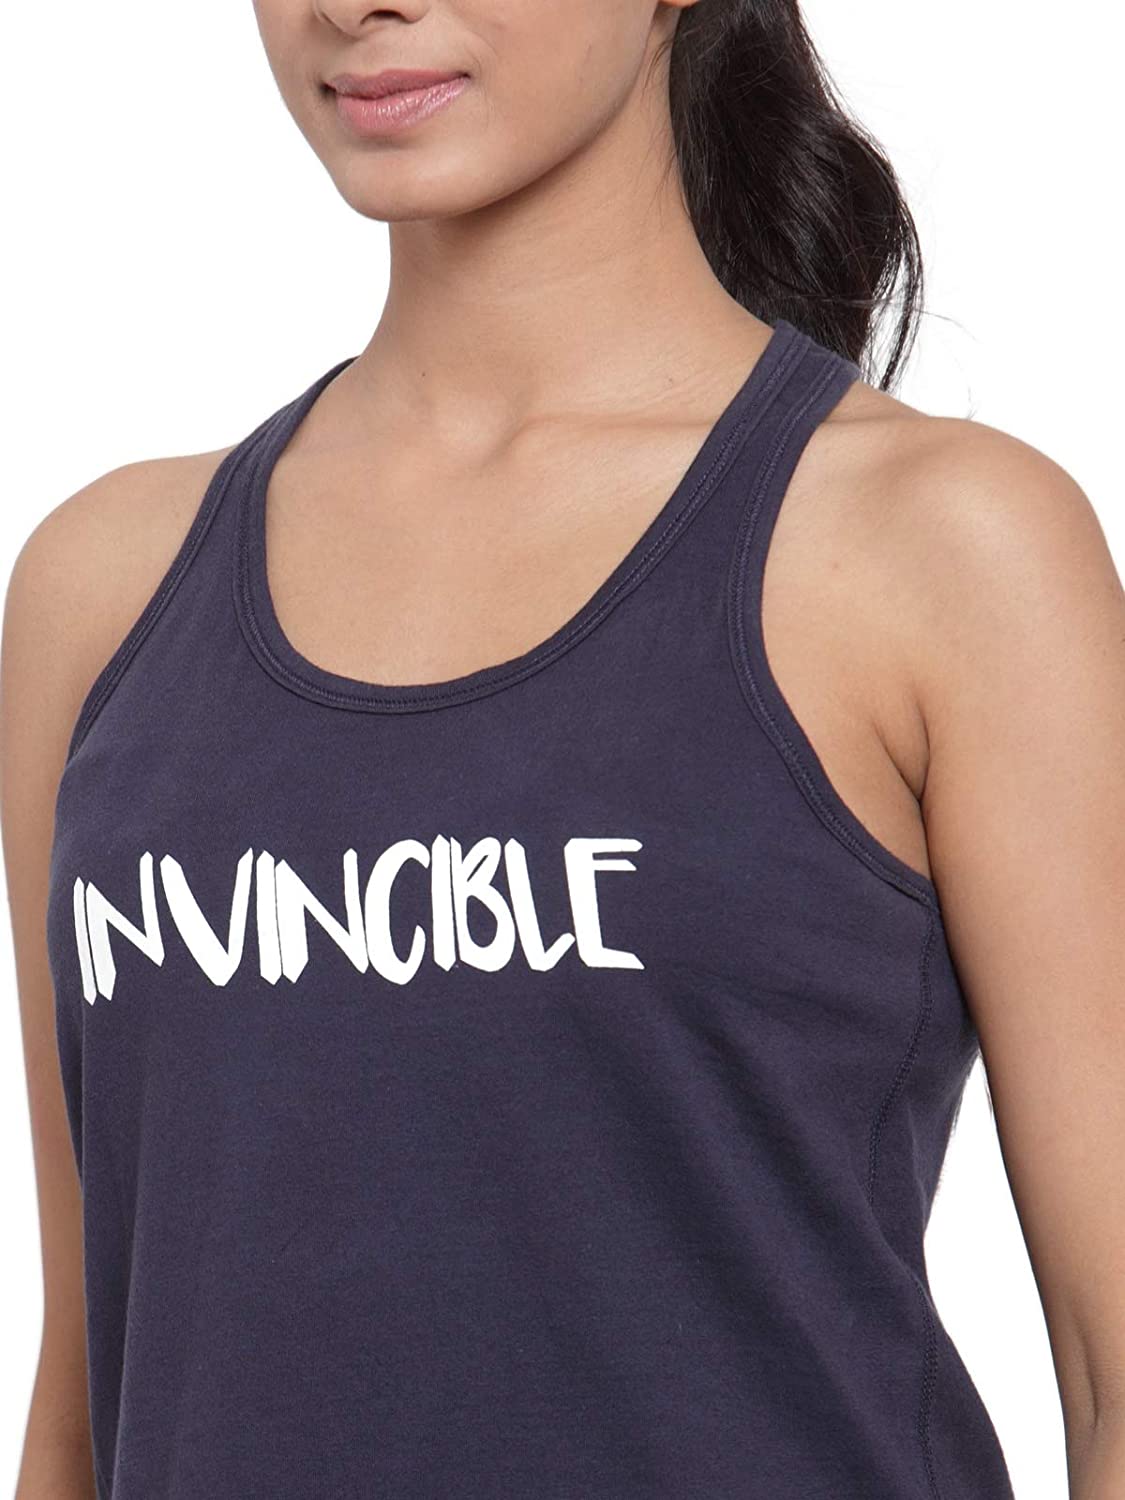 Invincible Women's Workout Tank Top